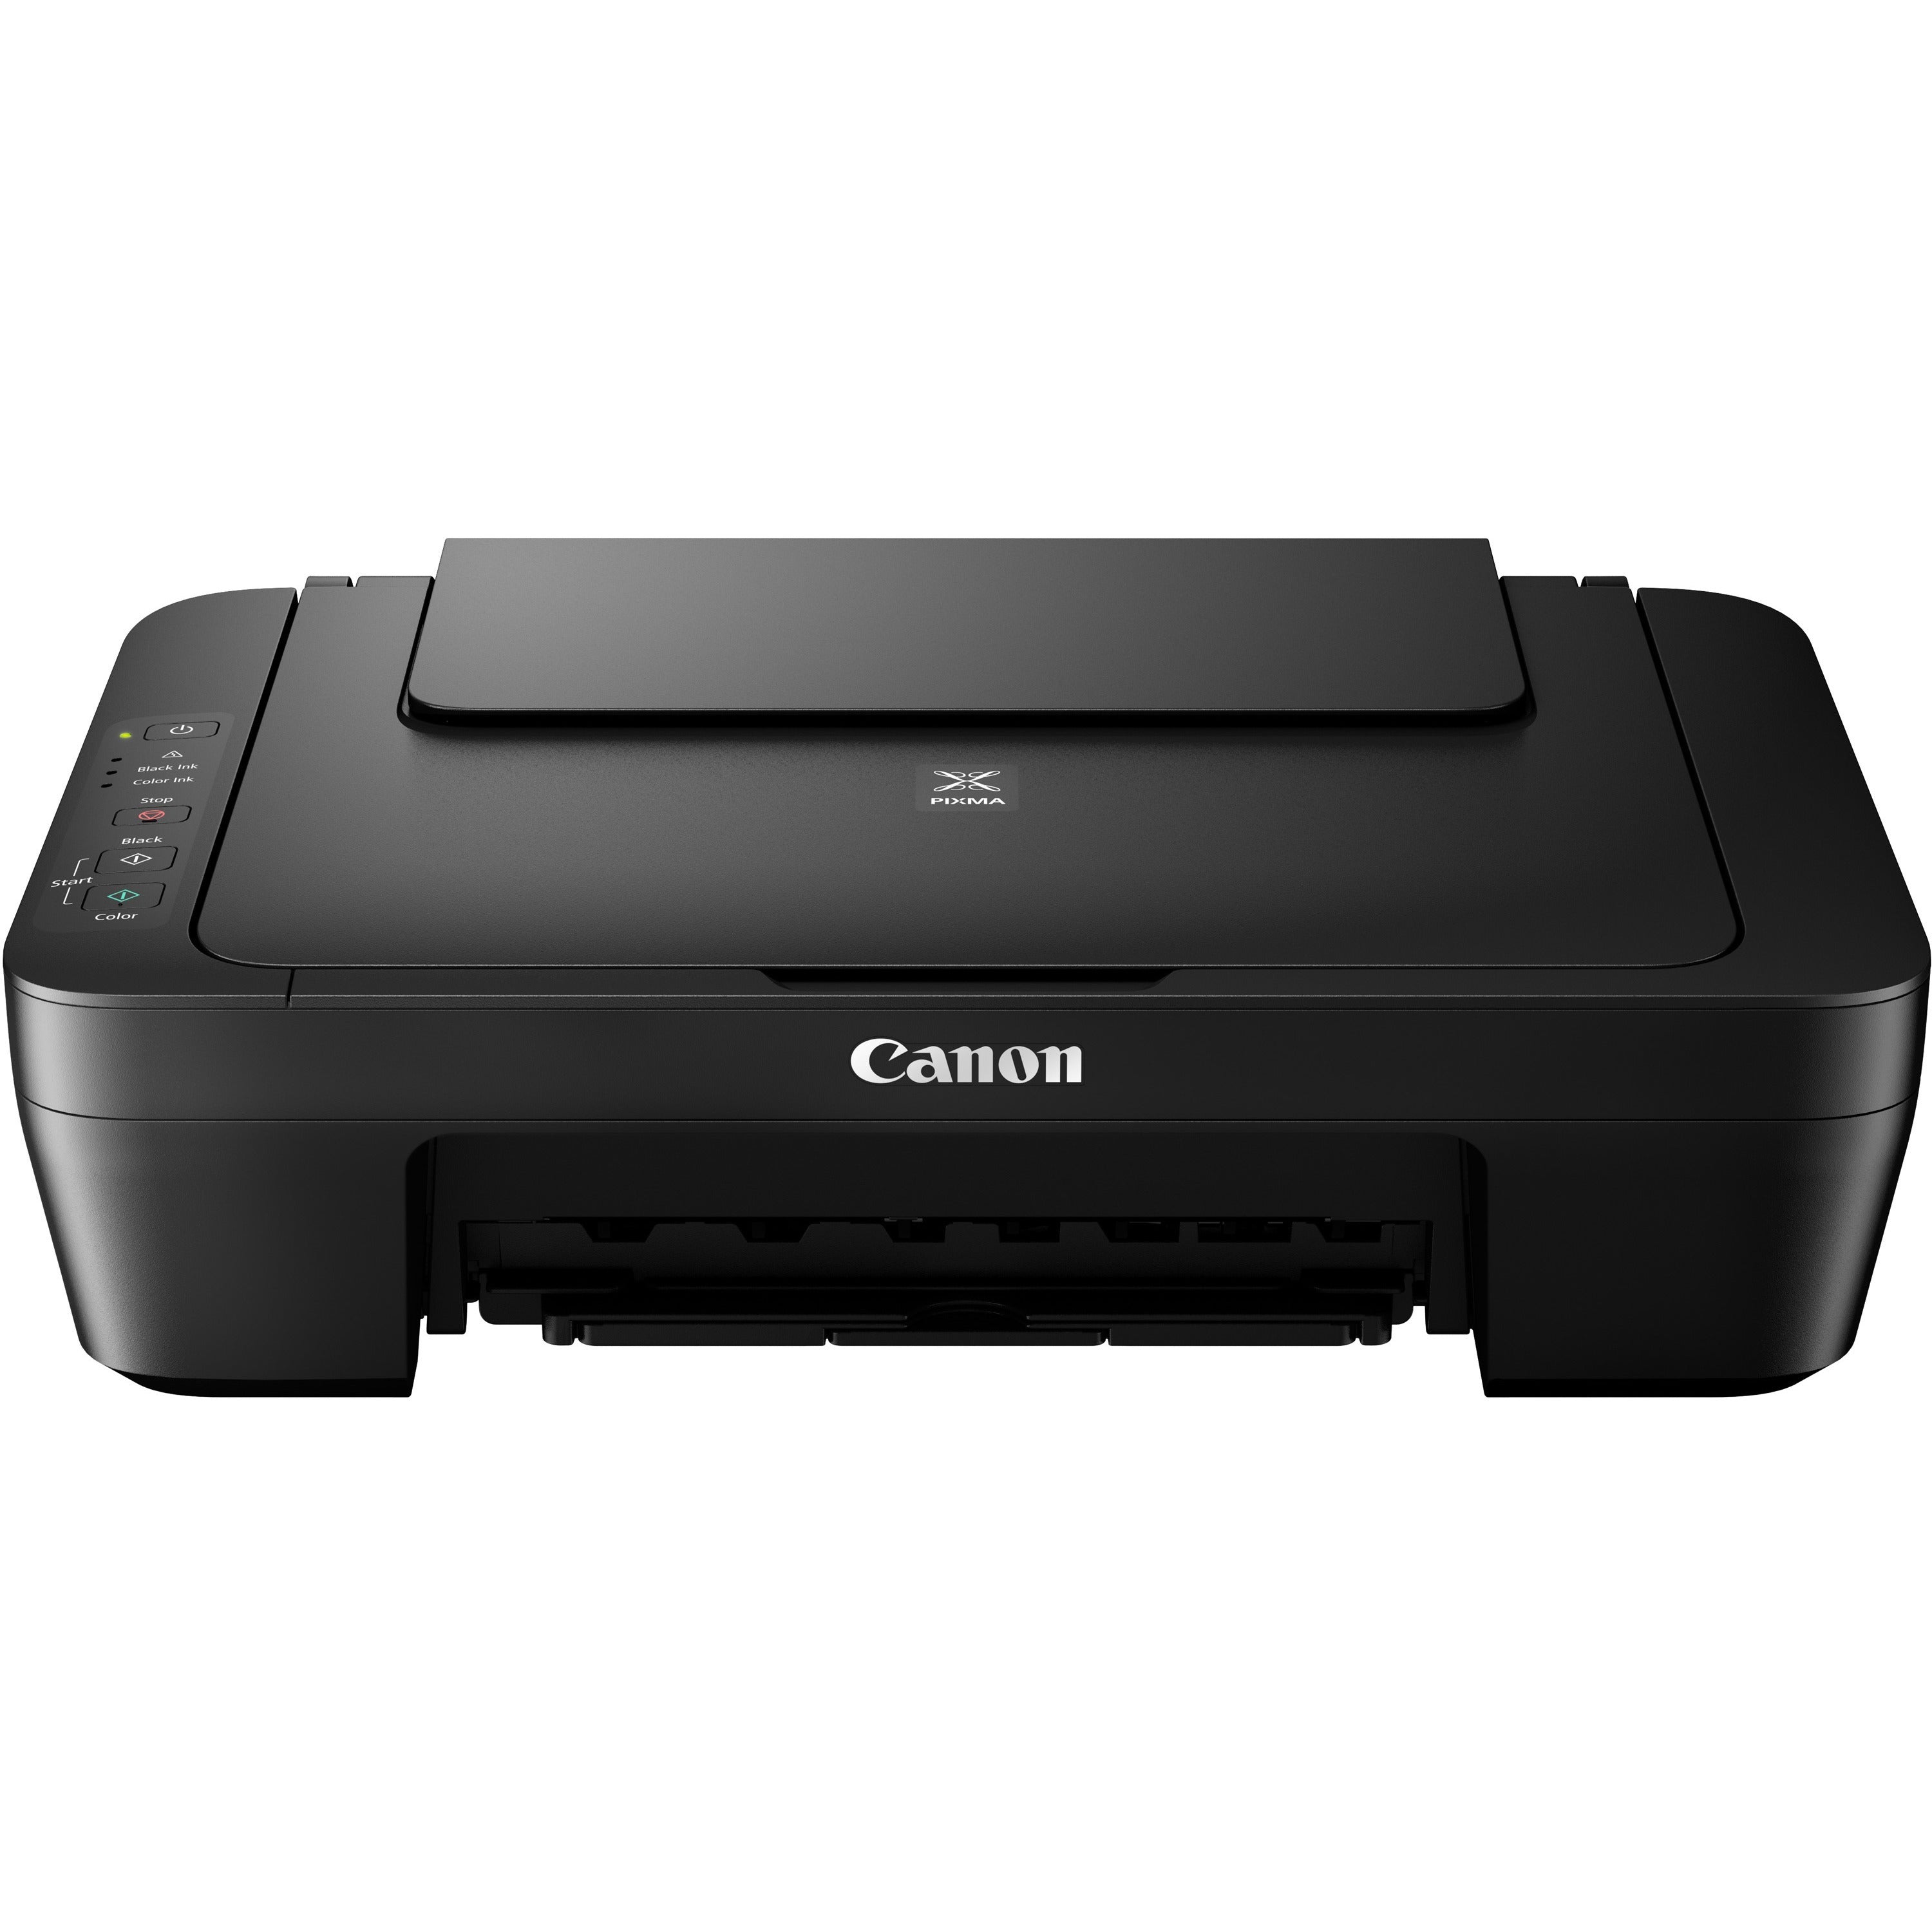 canon-pixma-mg2525bk-inkjet-multifunction-printer-color-black-copier-printer-scanner-4800-x-600-dpi-print-color-scanner-600-dpi-optical-scan-usb-1-each-for-plain-paper-print_cnmmg2525bk - 2